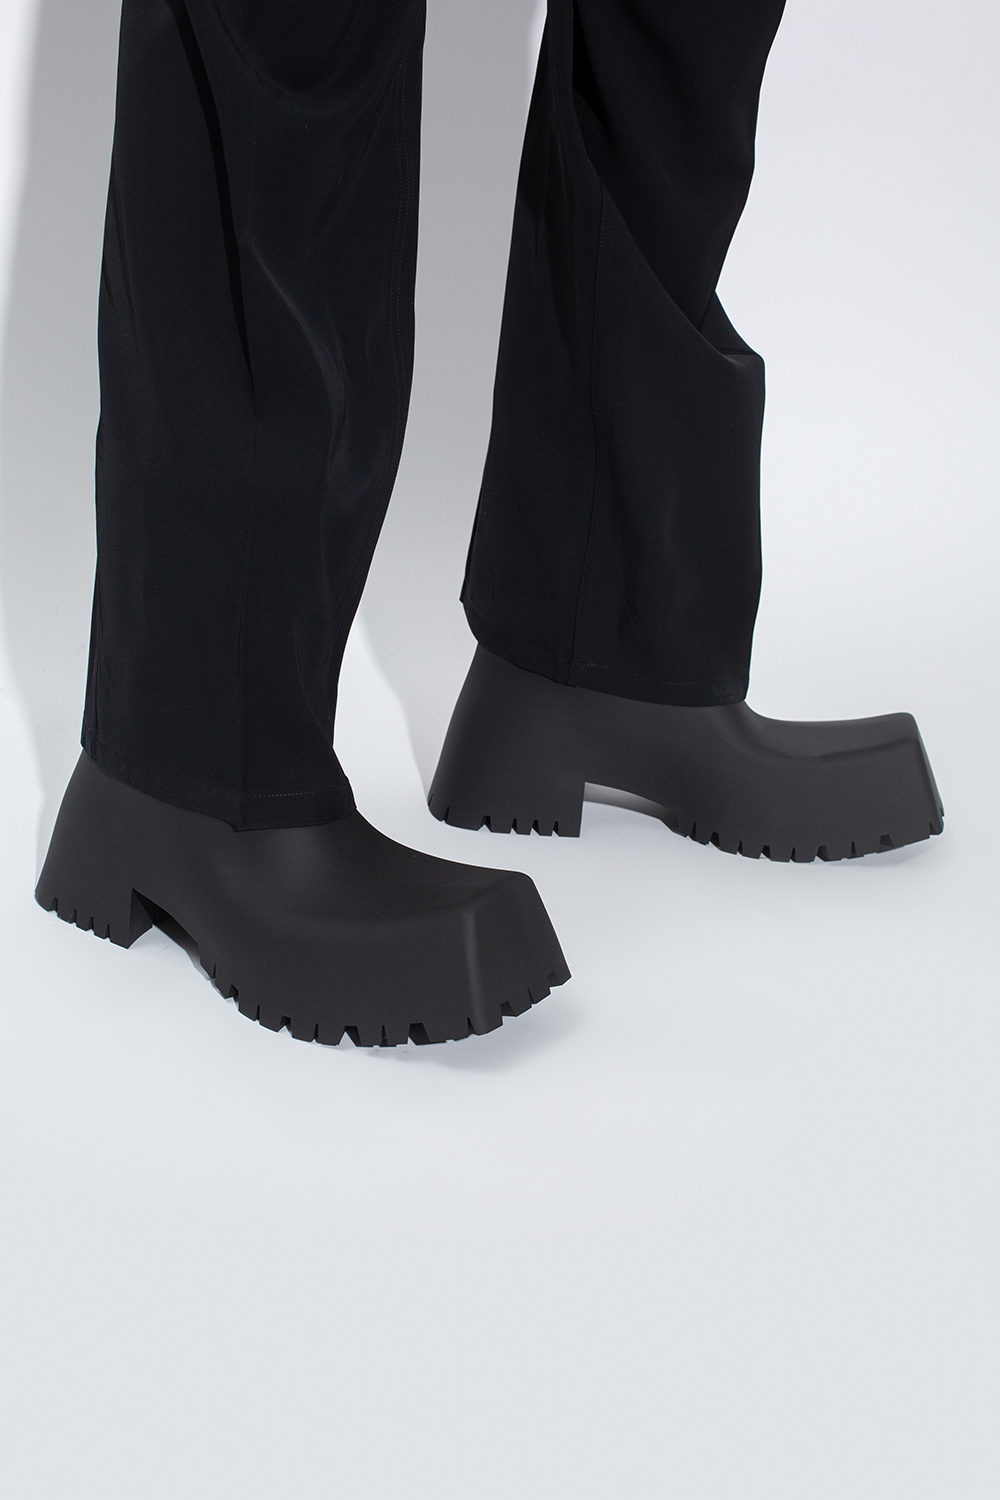 Balenciaga 'Trooper' rain boots | Men's Shoes | Vitkac